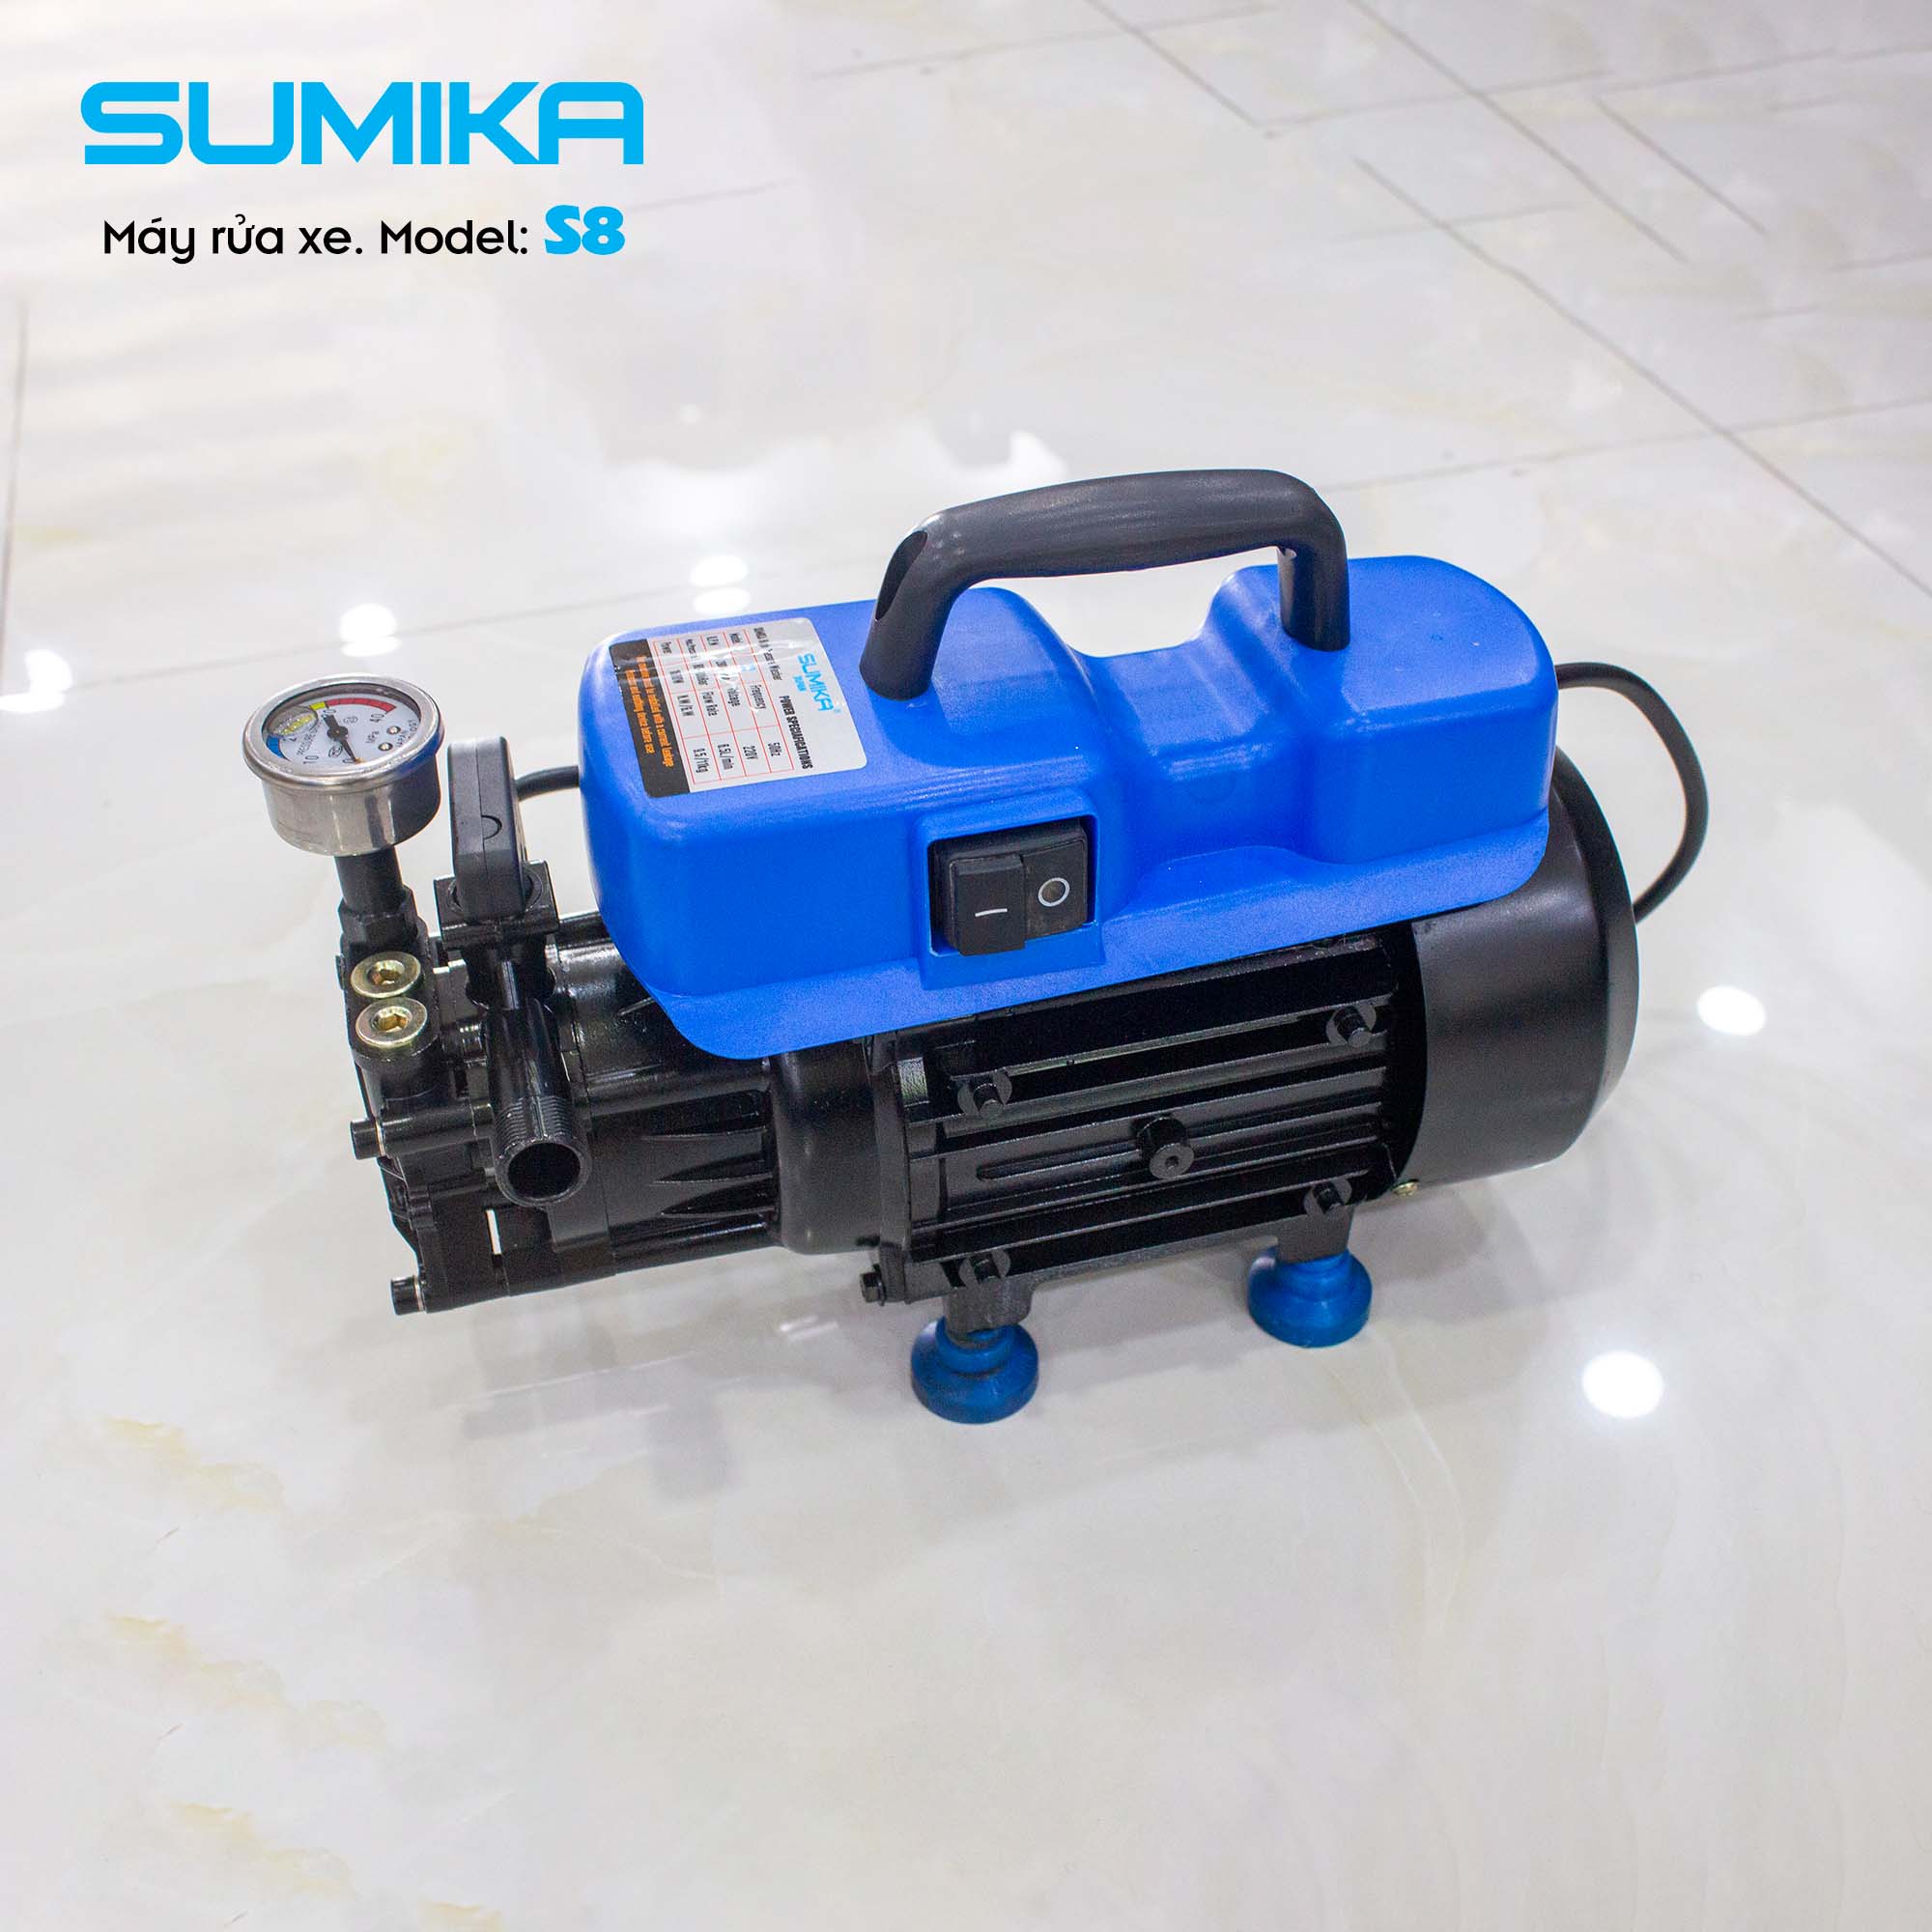 Sumika S8 family car washer